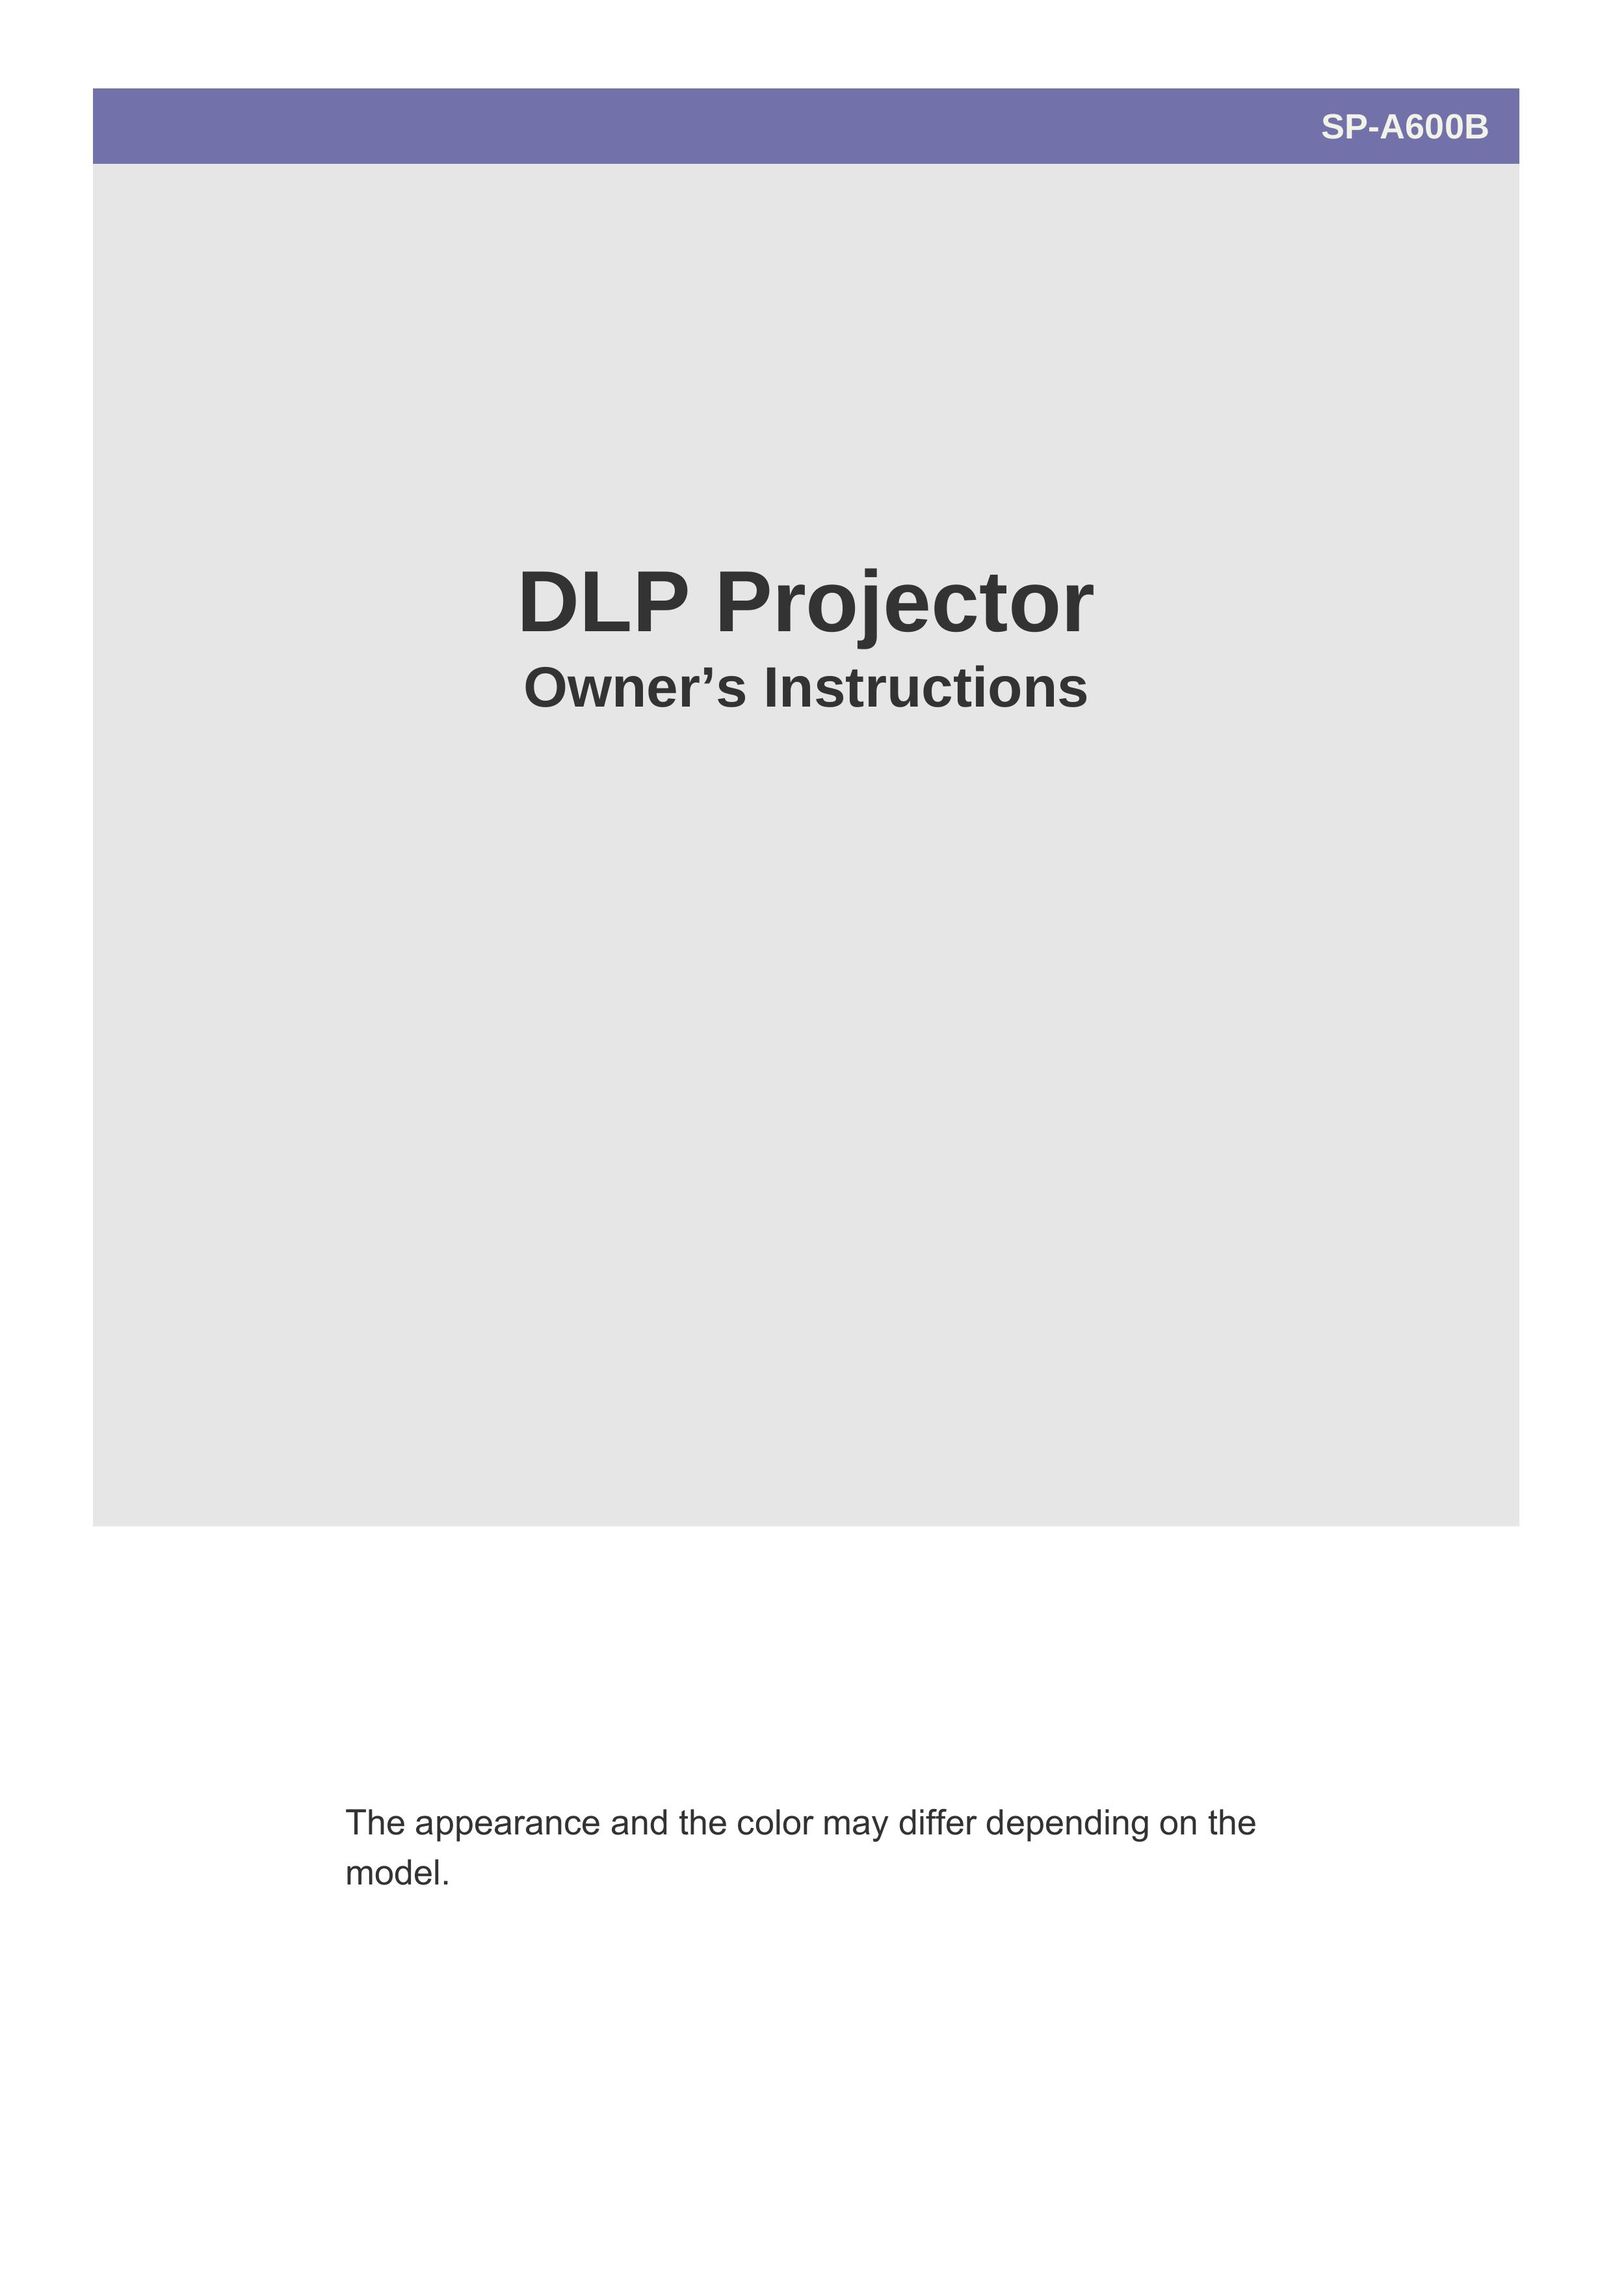 Samsung SP-A600B Projector User Manual